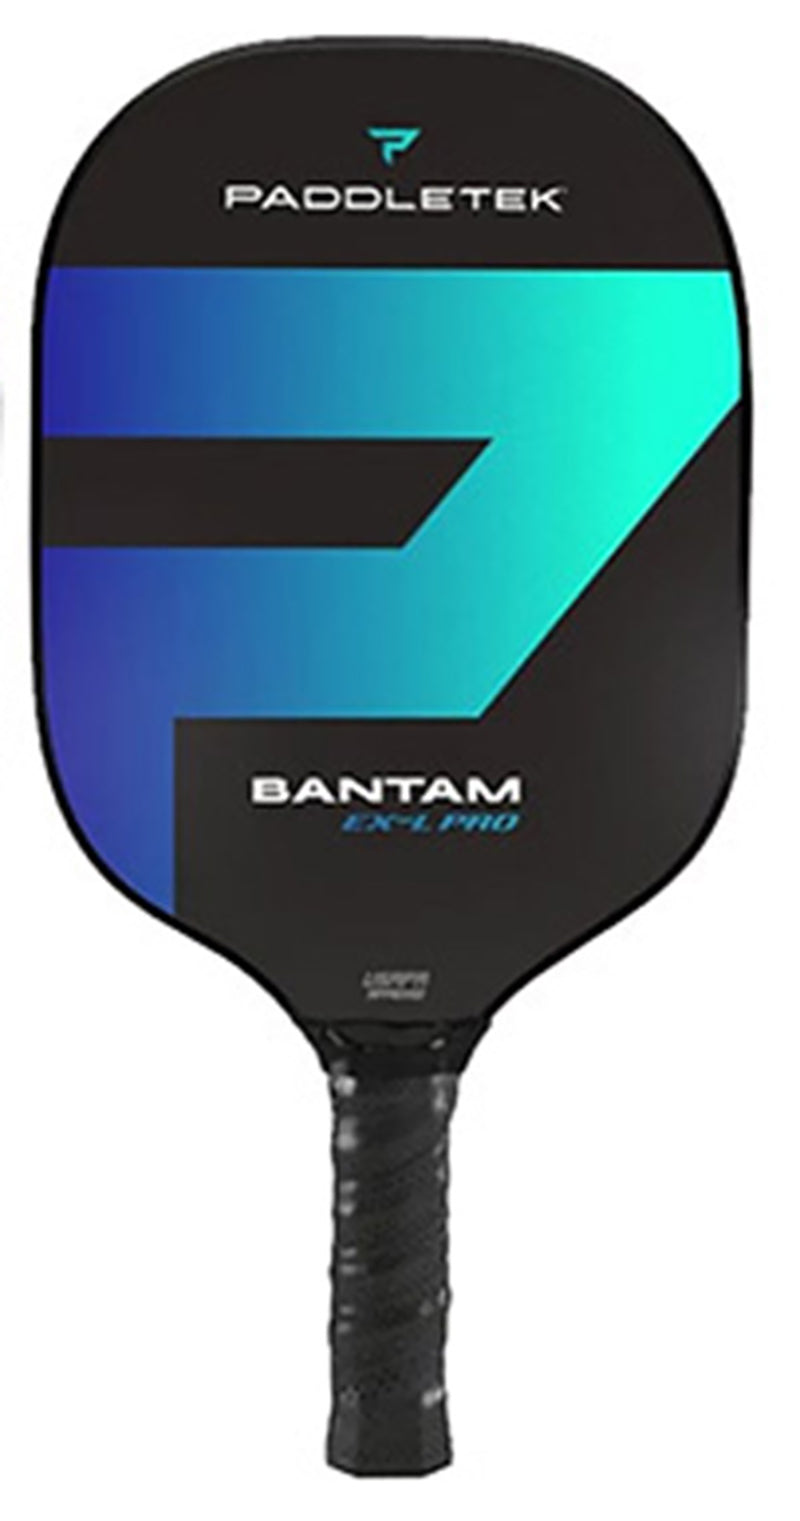 Paddletek Bantam EX-L Pro Pickleball Paddle (Standard) (Blue) vid-40174020427863